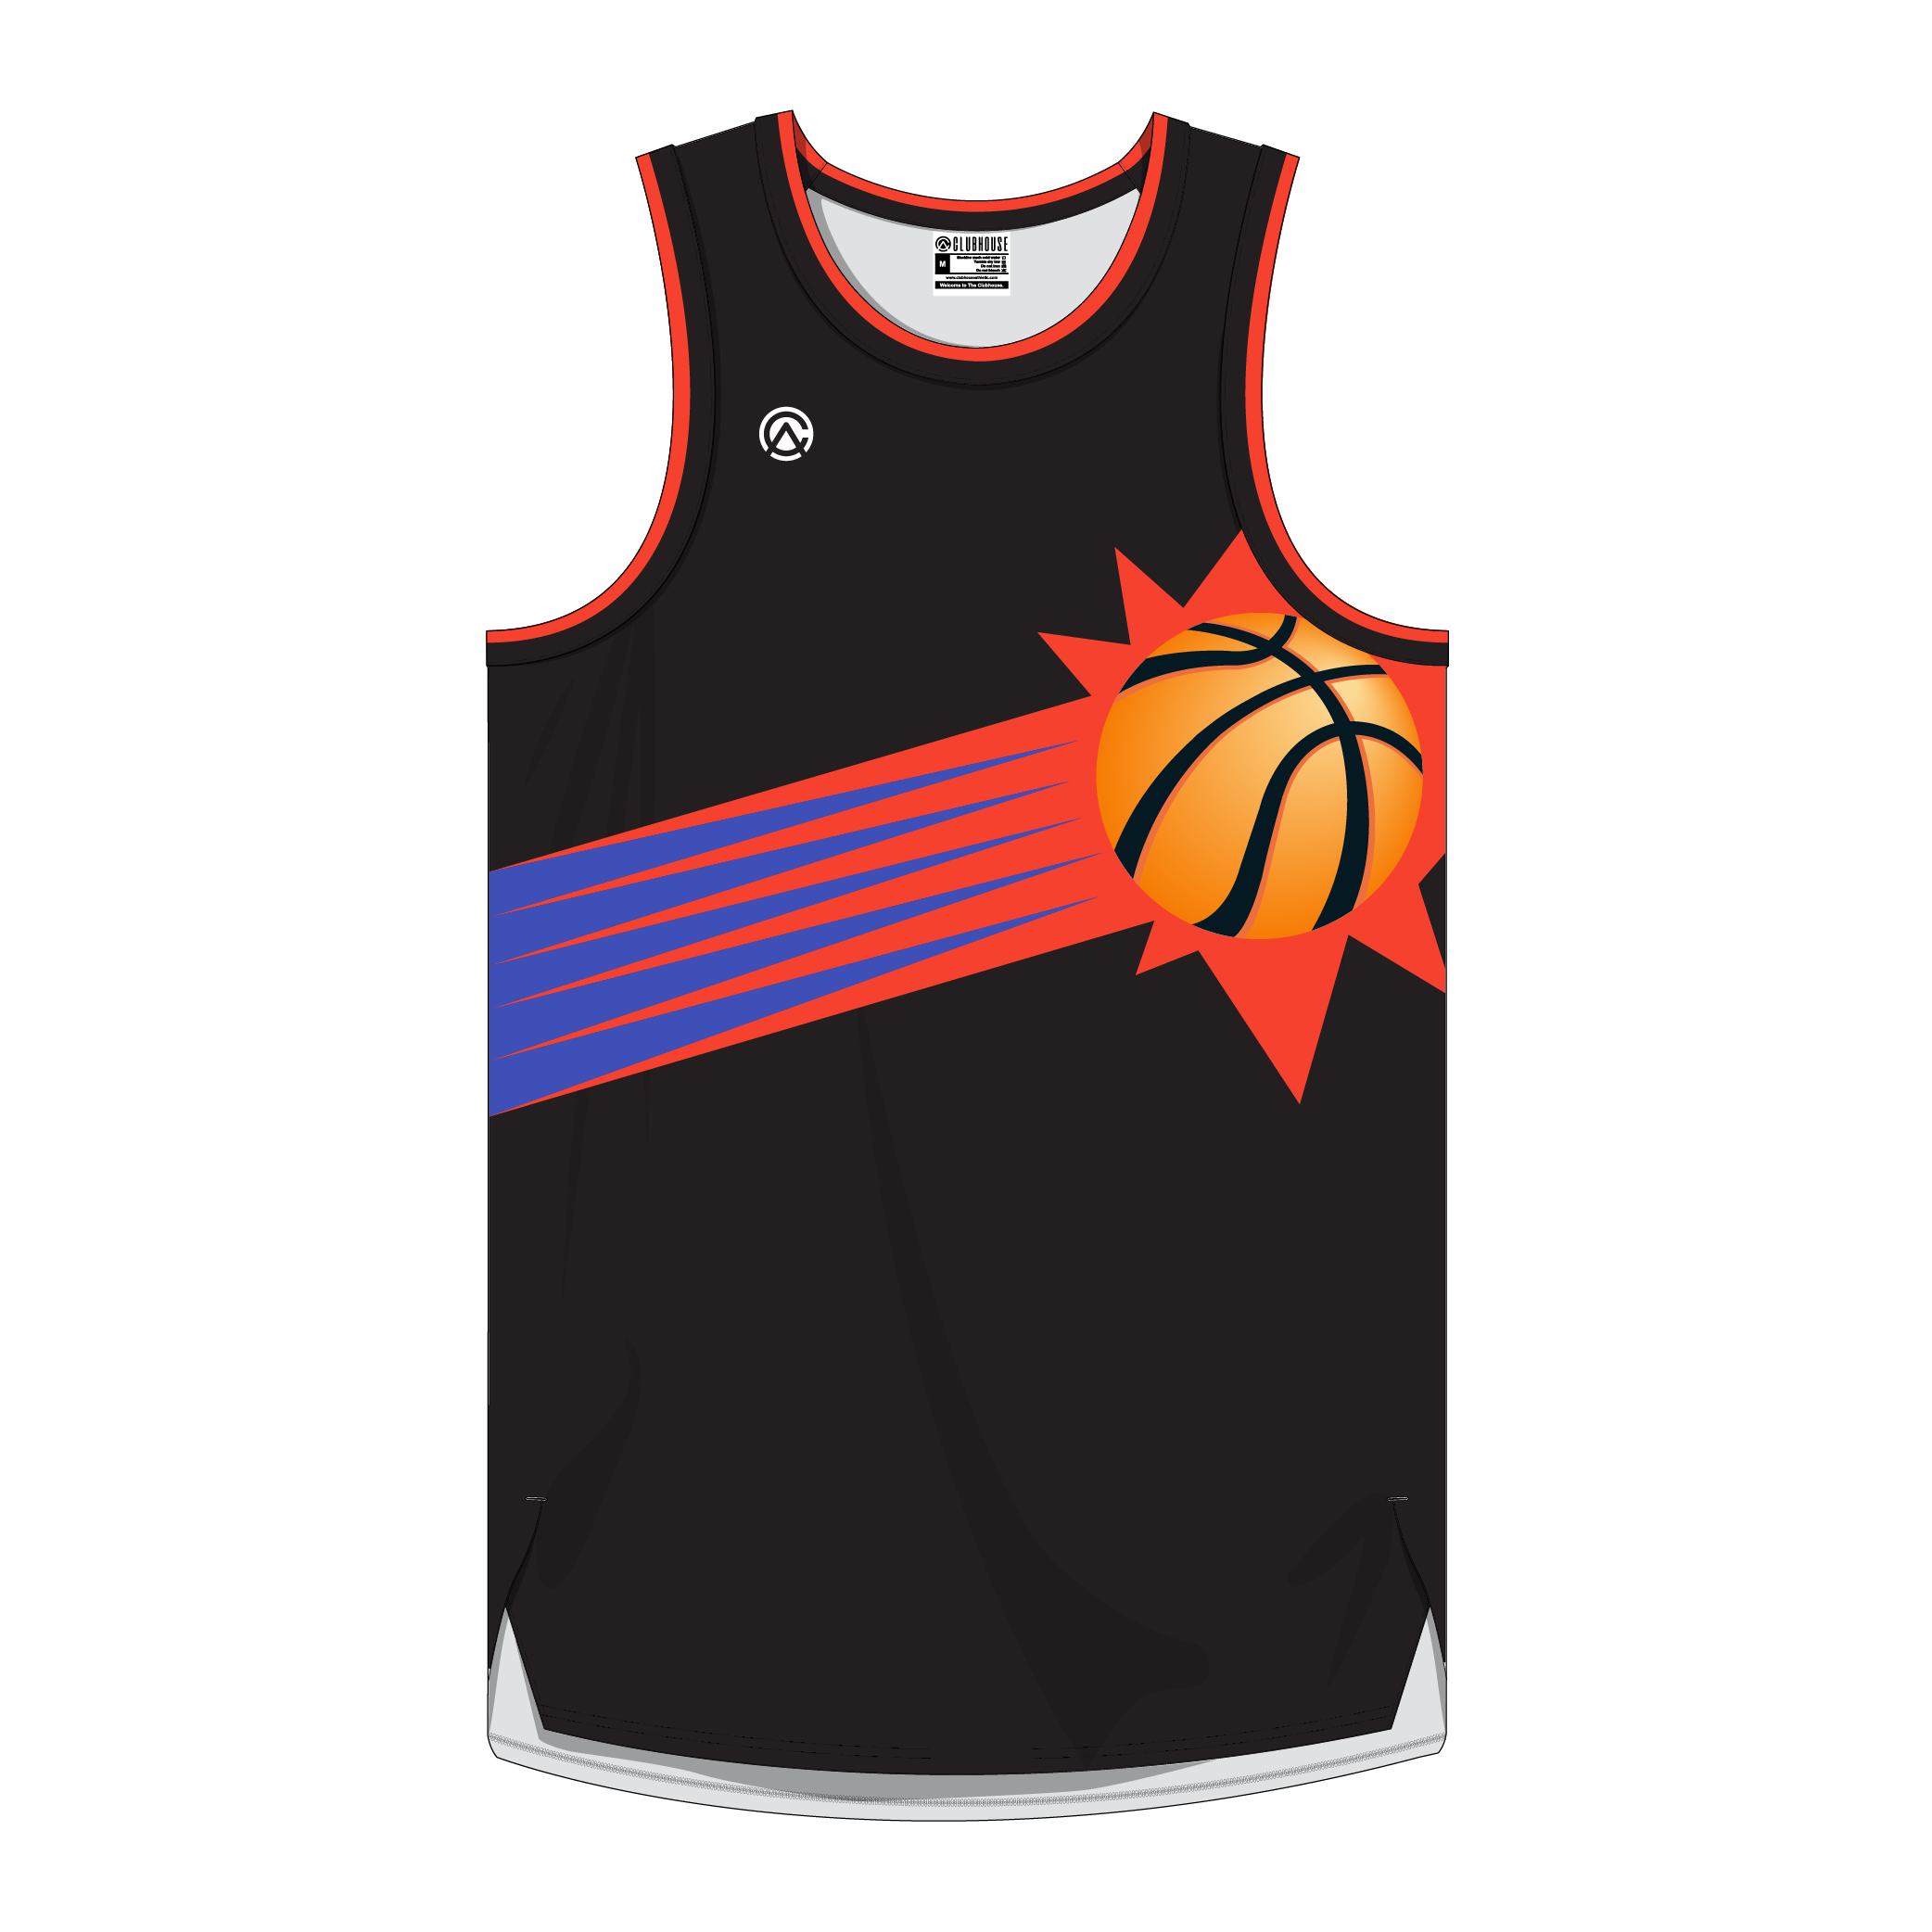 Clubhouse Original: Phoenix Pinstripe Basketball Jersey